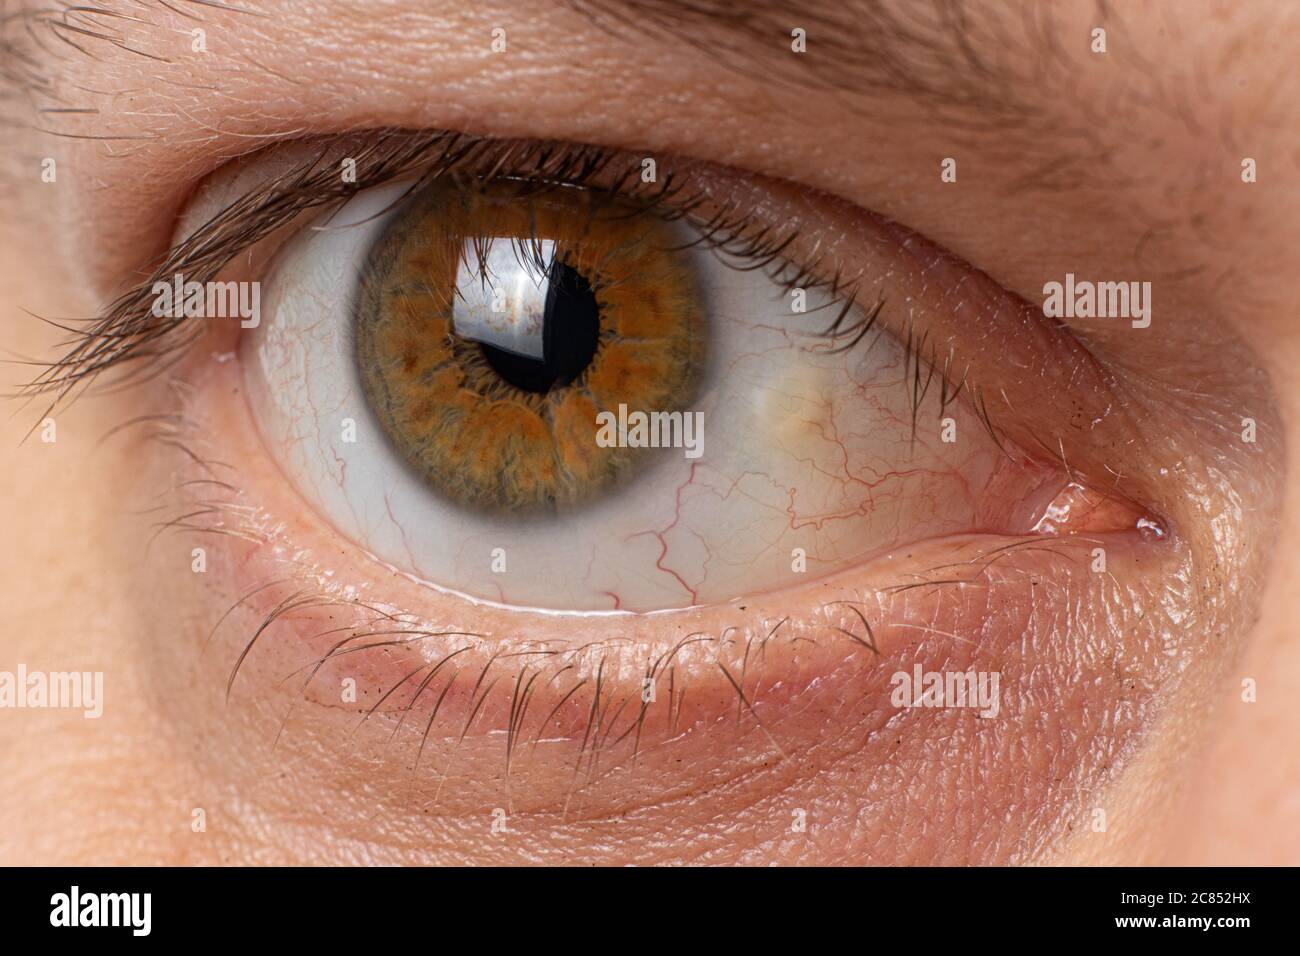 Pinguecula eyes macro photo close-up of the male eye. Yellow education on squirrel, farmer's eye. Stock Photo